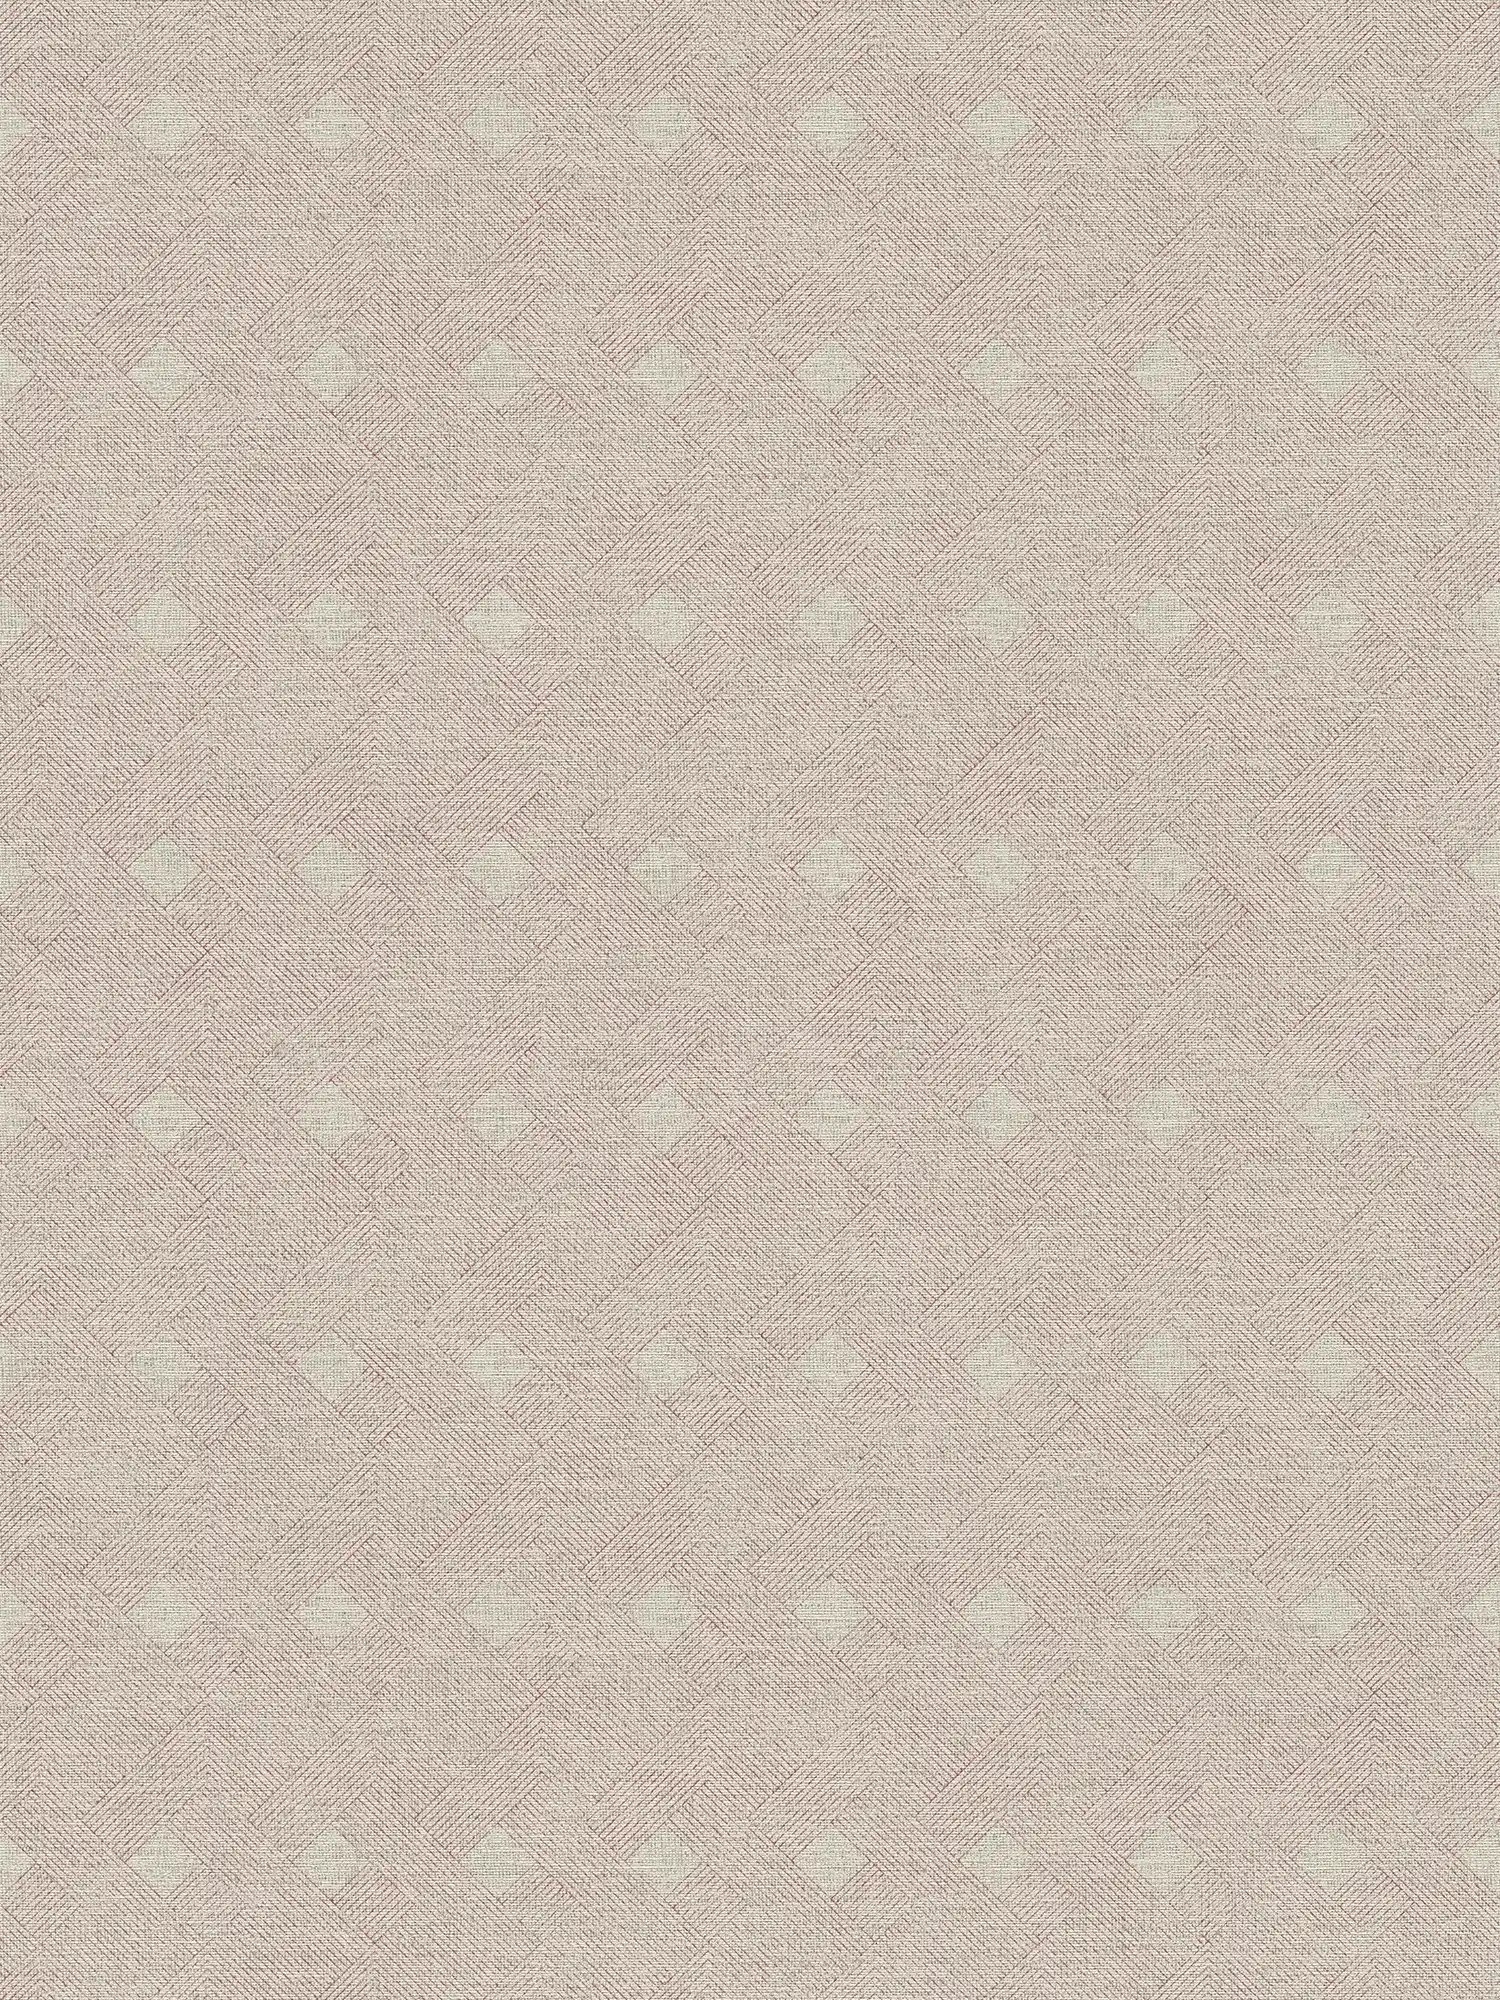 Pattern wallpaper lines & diamonds in vintage textile look - beige, red
